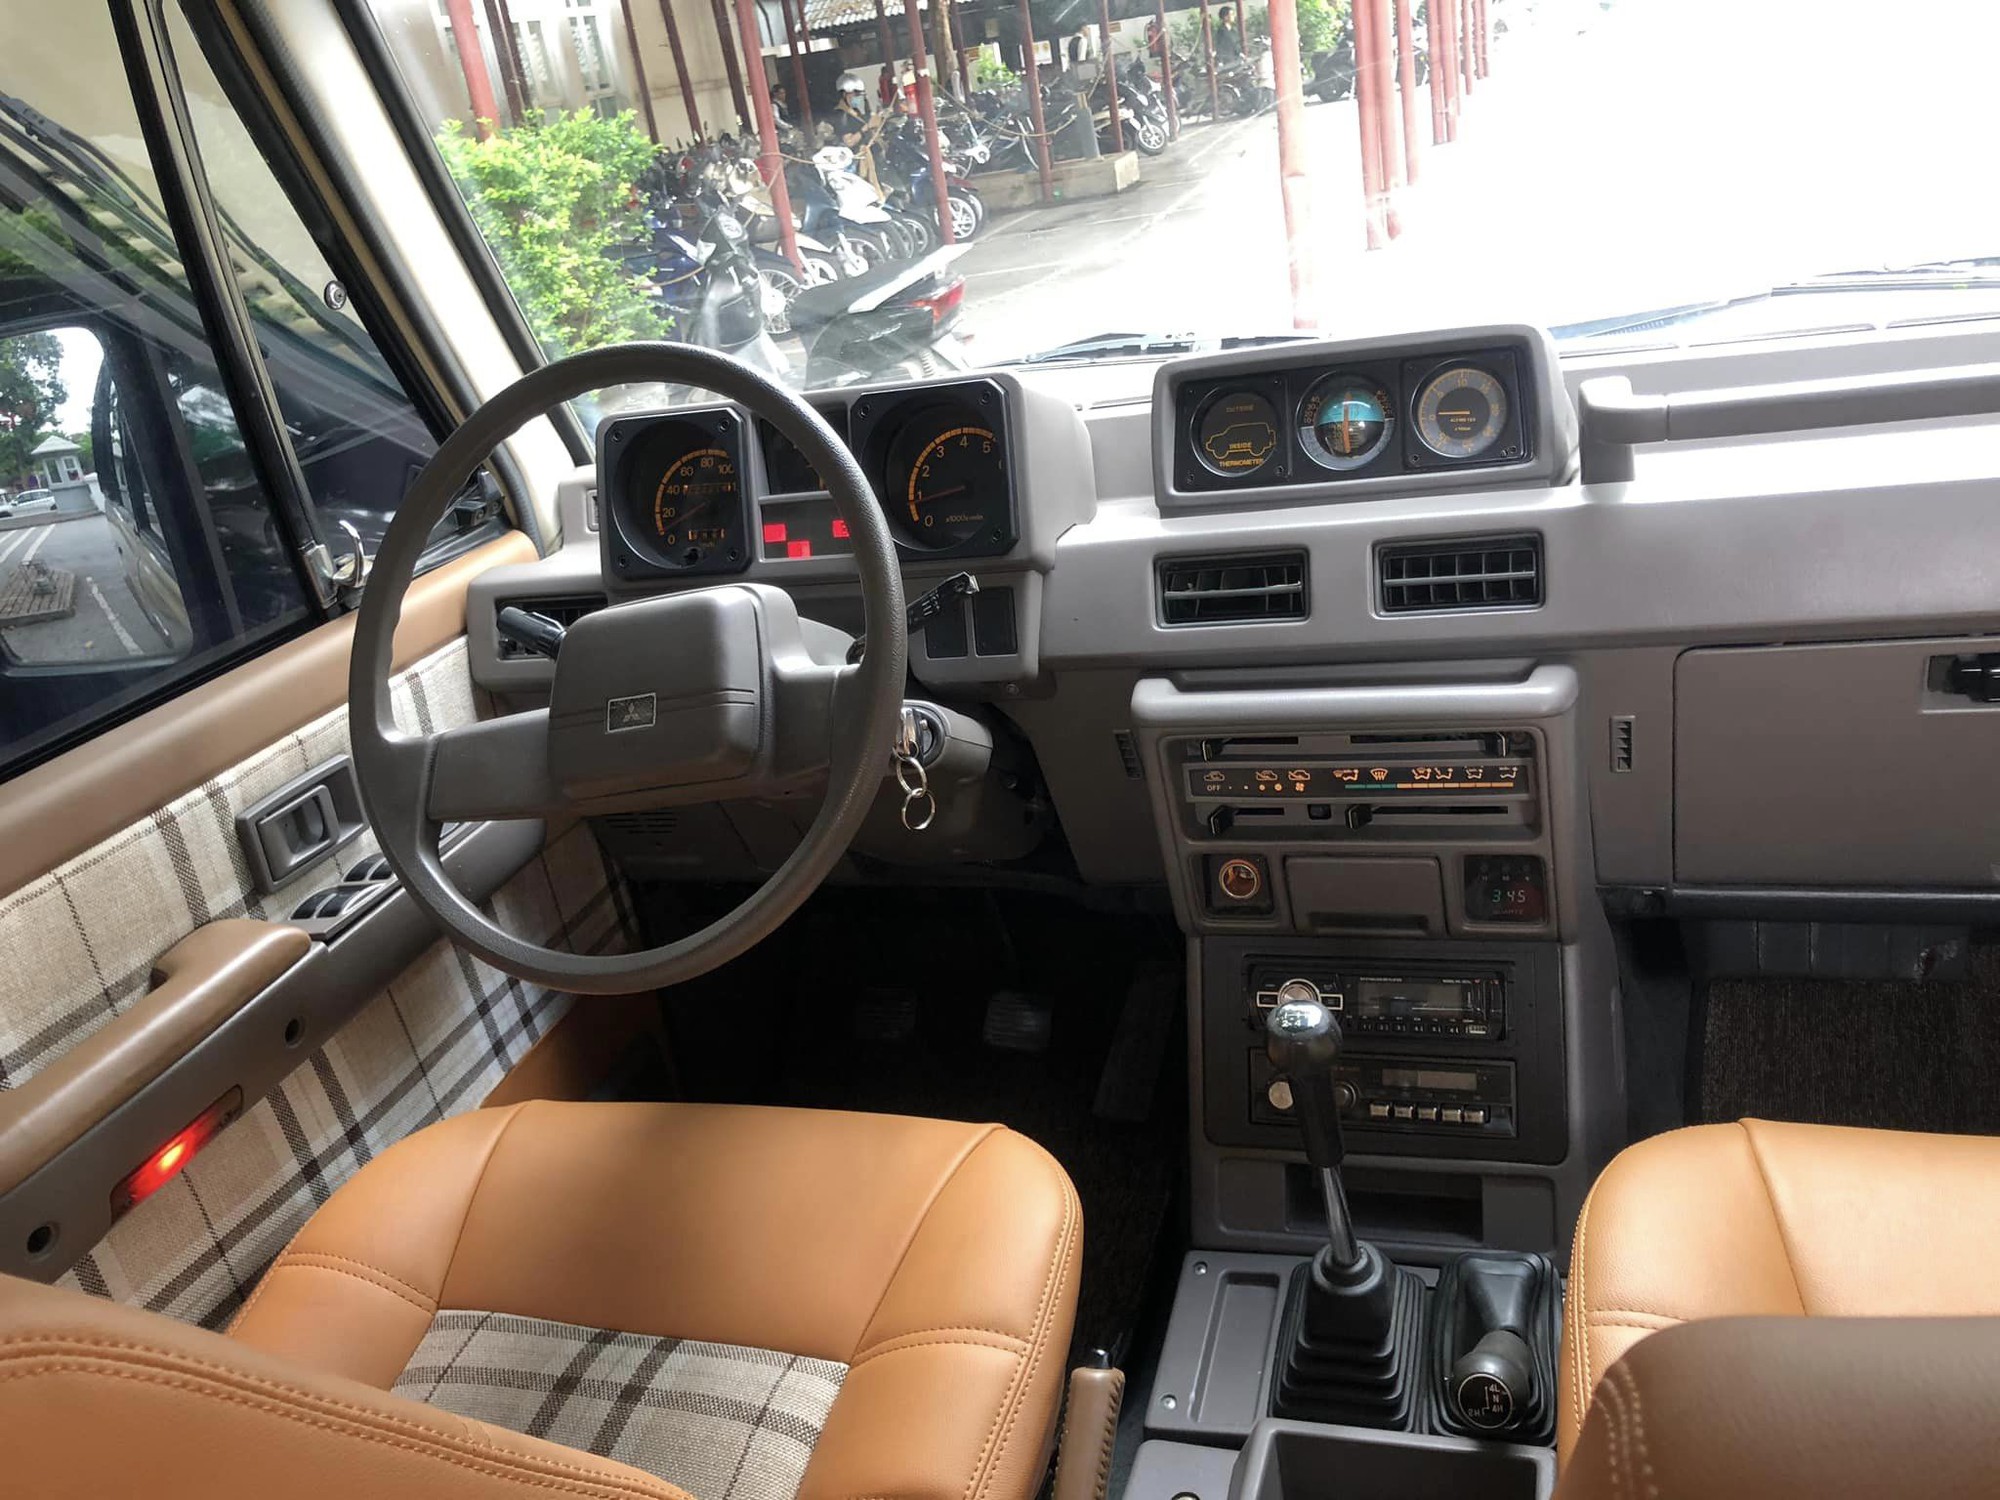 Xe hiếm Mitsubishi Pajero MK1 gần 35 năm tuổi tại Việt Nam- Ảnh 3.